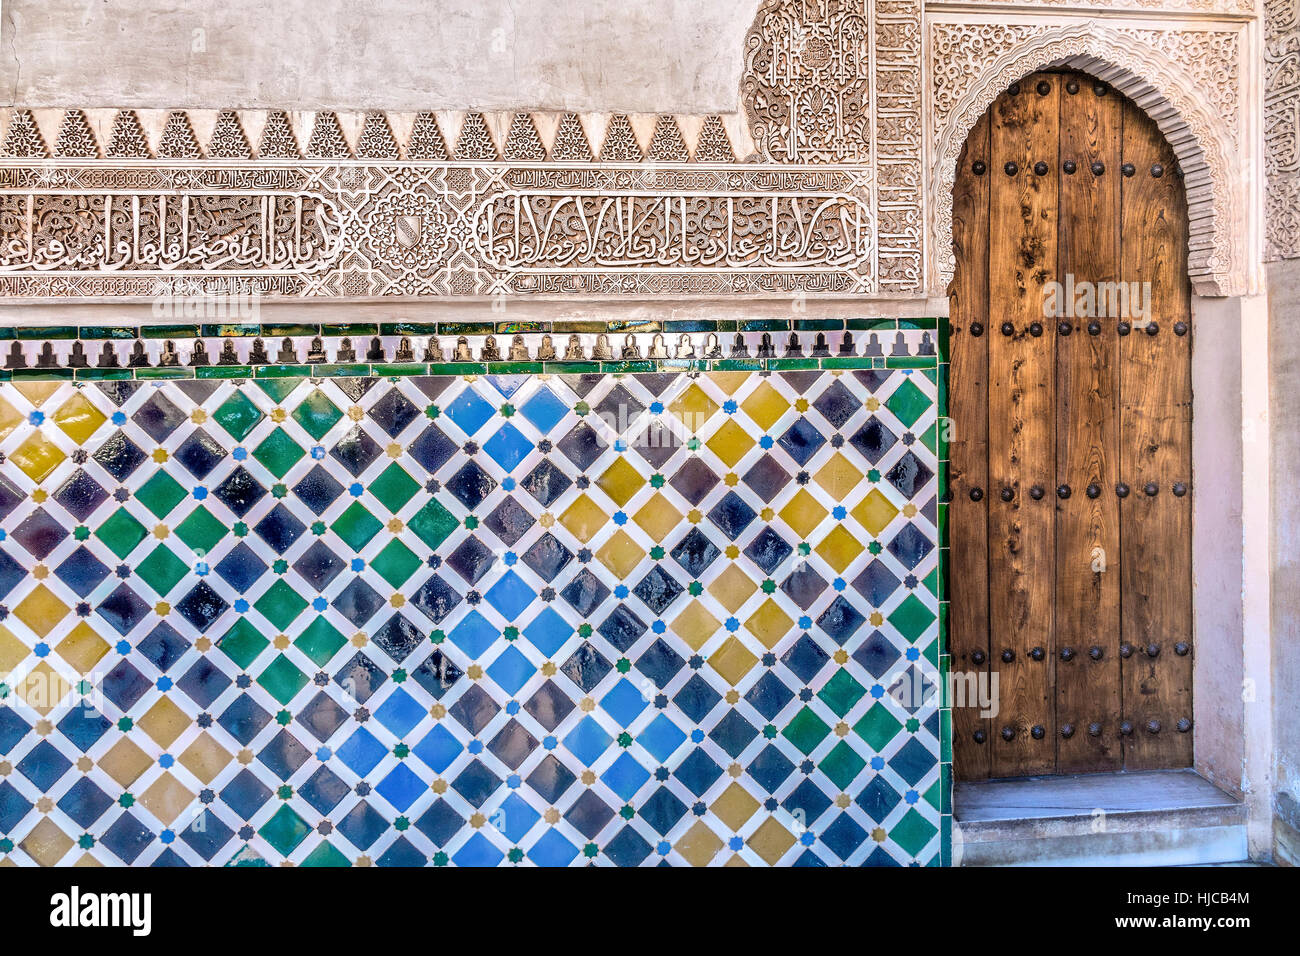 Ceramic Tiles And Plasterwork Palacios Nazaries Alhambra Palace Granada Andalucia Spain Stock Photo